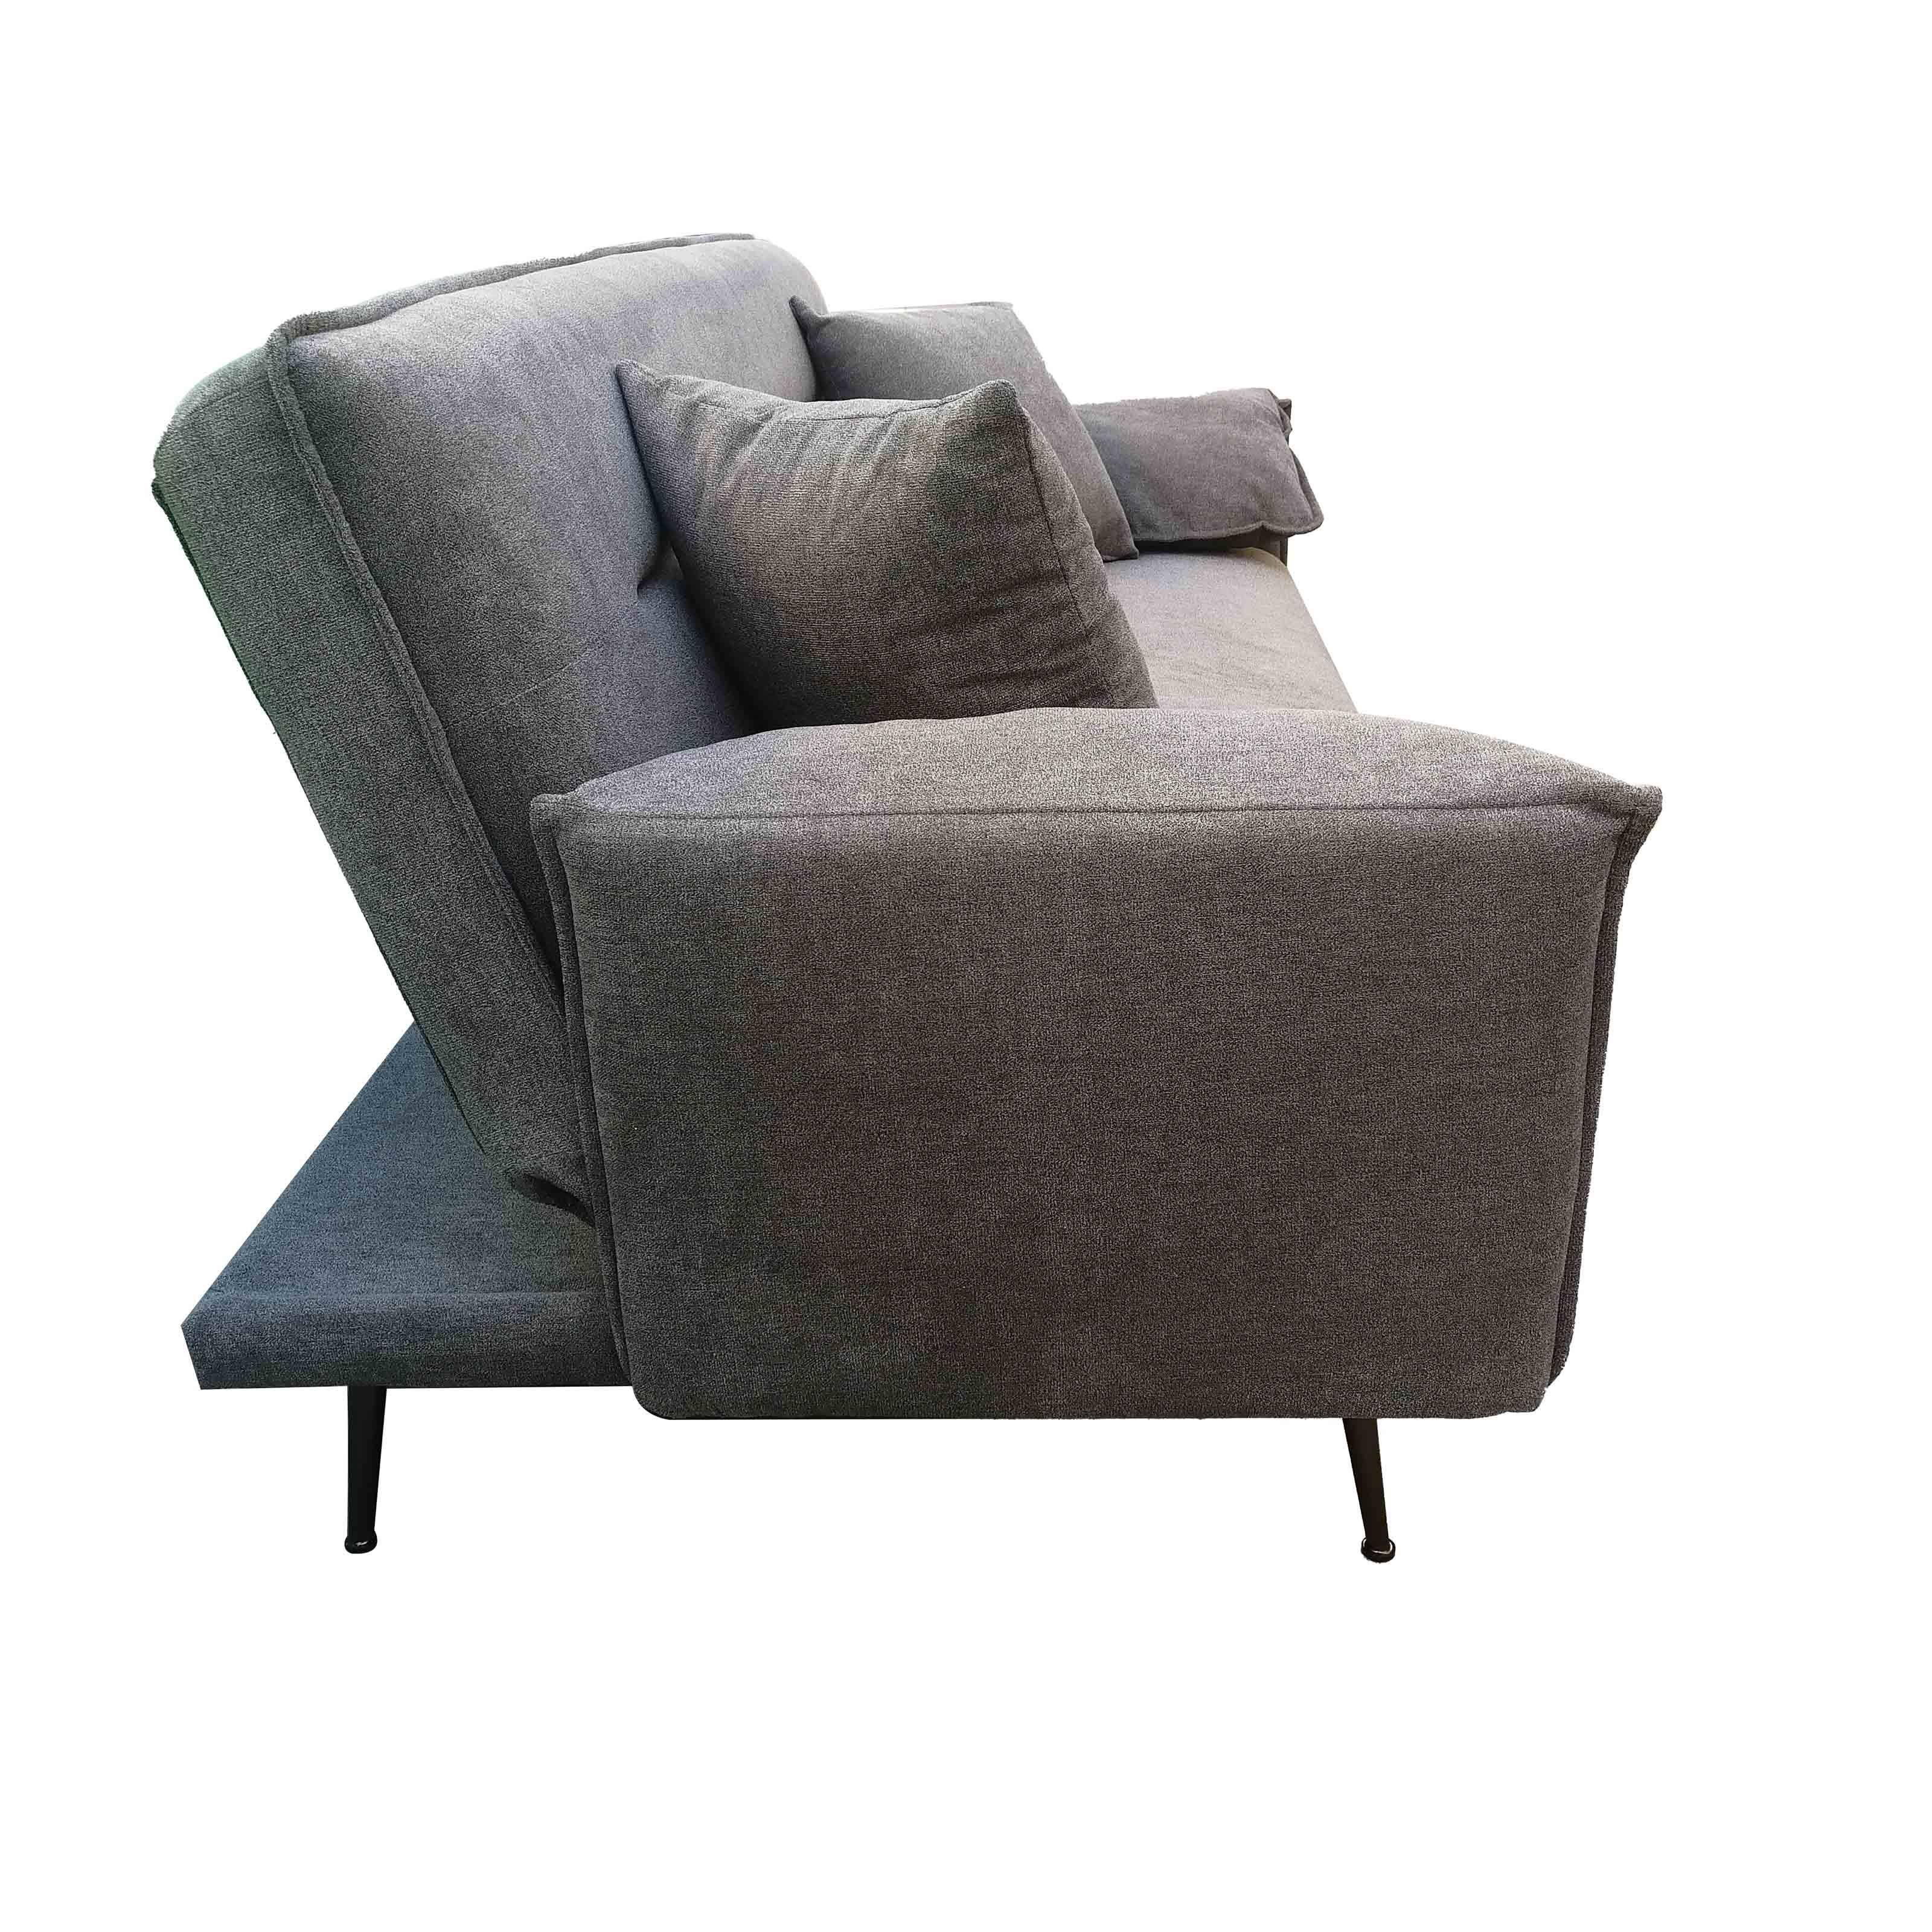 Sofa "Lana", dunkelgrau - Dunkelgrau/Grau, MODERN, Holz/Textil (199/89/95cm) - Bessagi Home